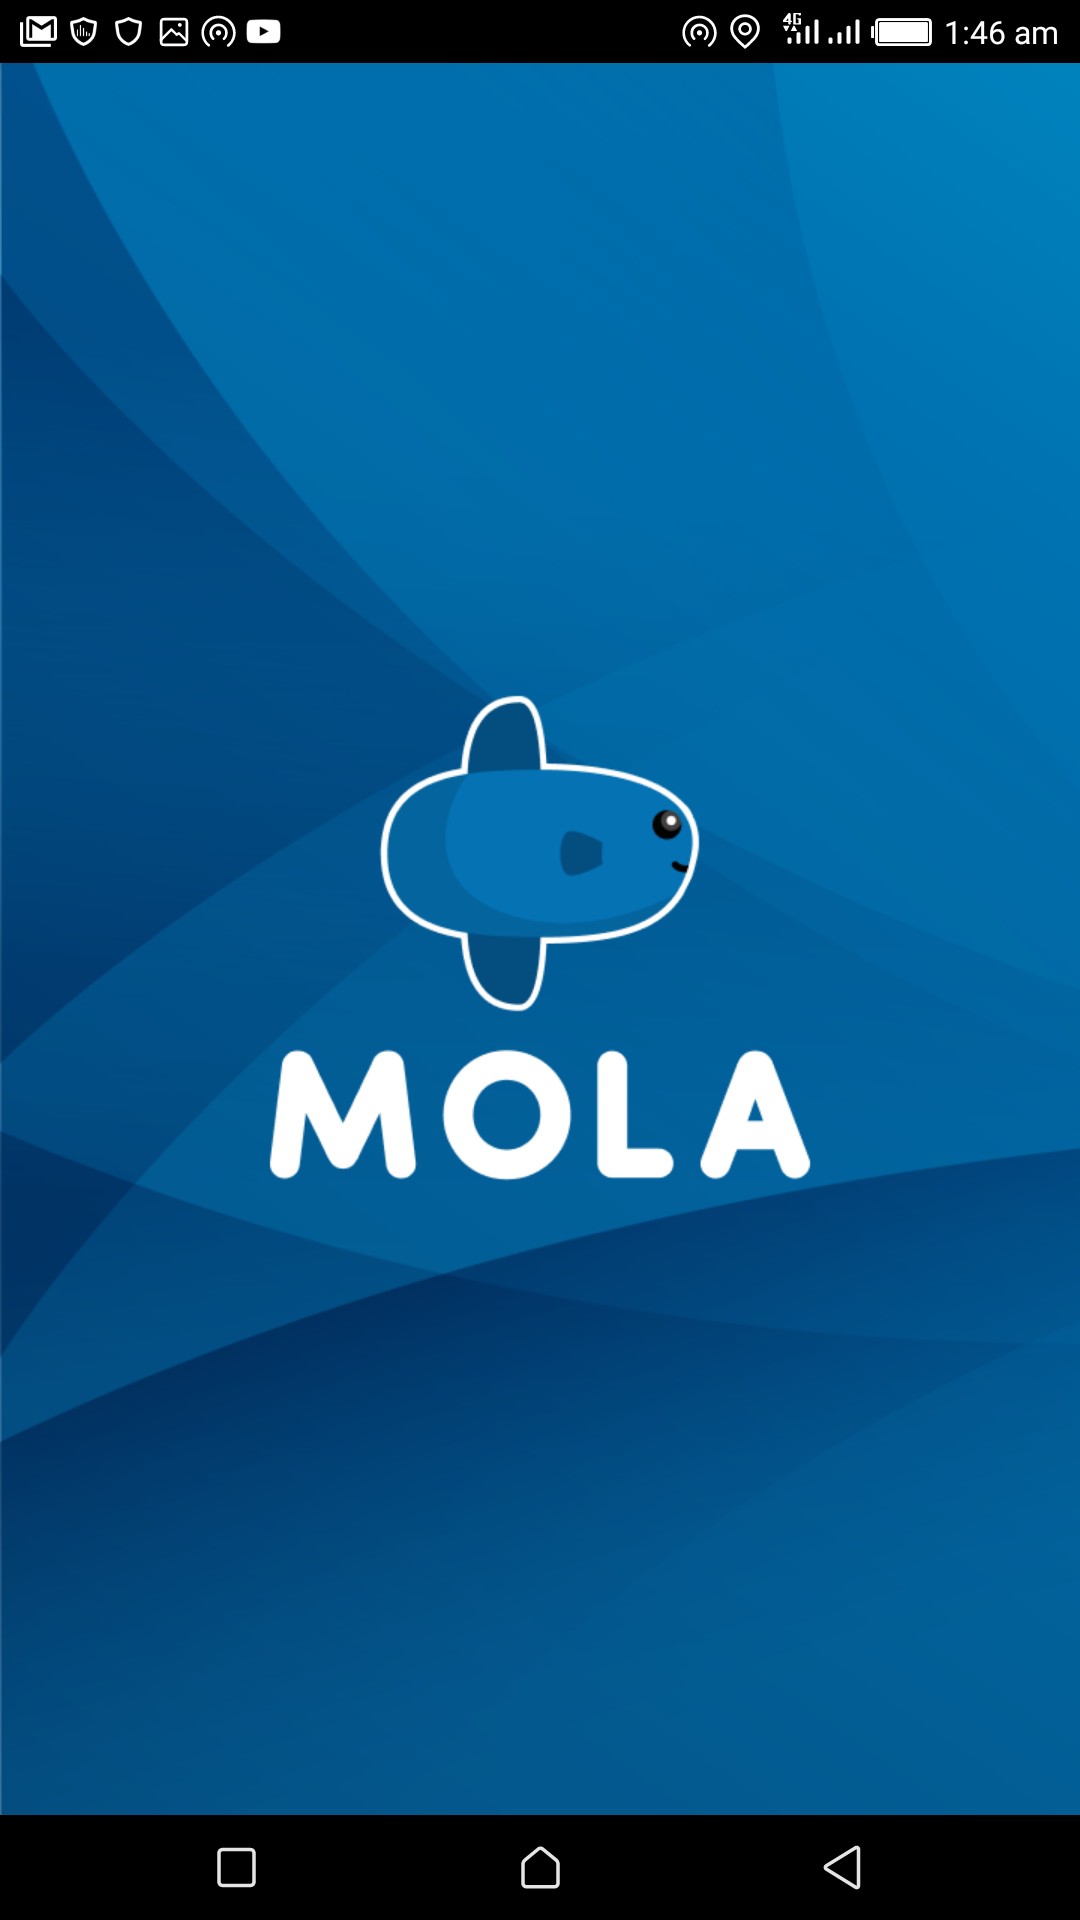 Screenshot 20210616 014608 - Mola TV Mod Apk V2.2.0.61 (Premium Unlocked)